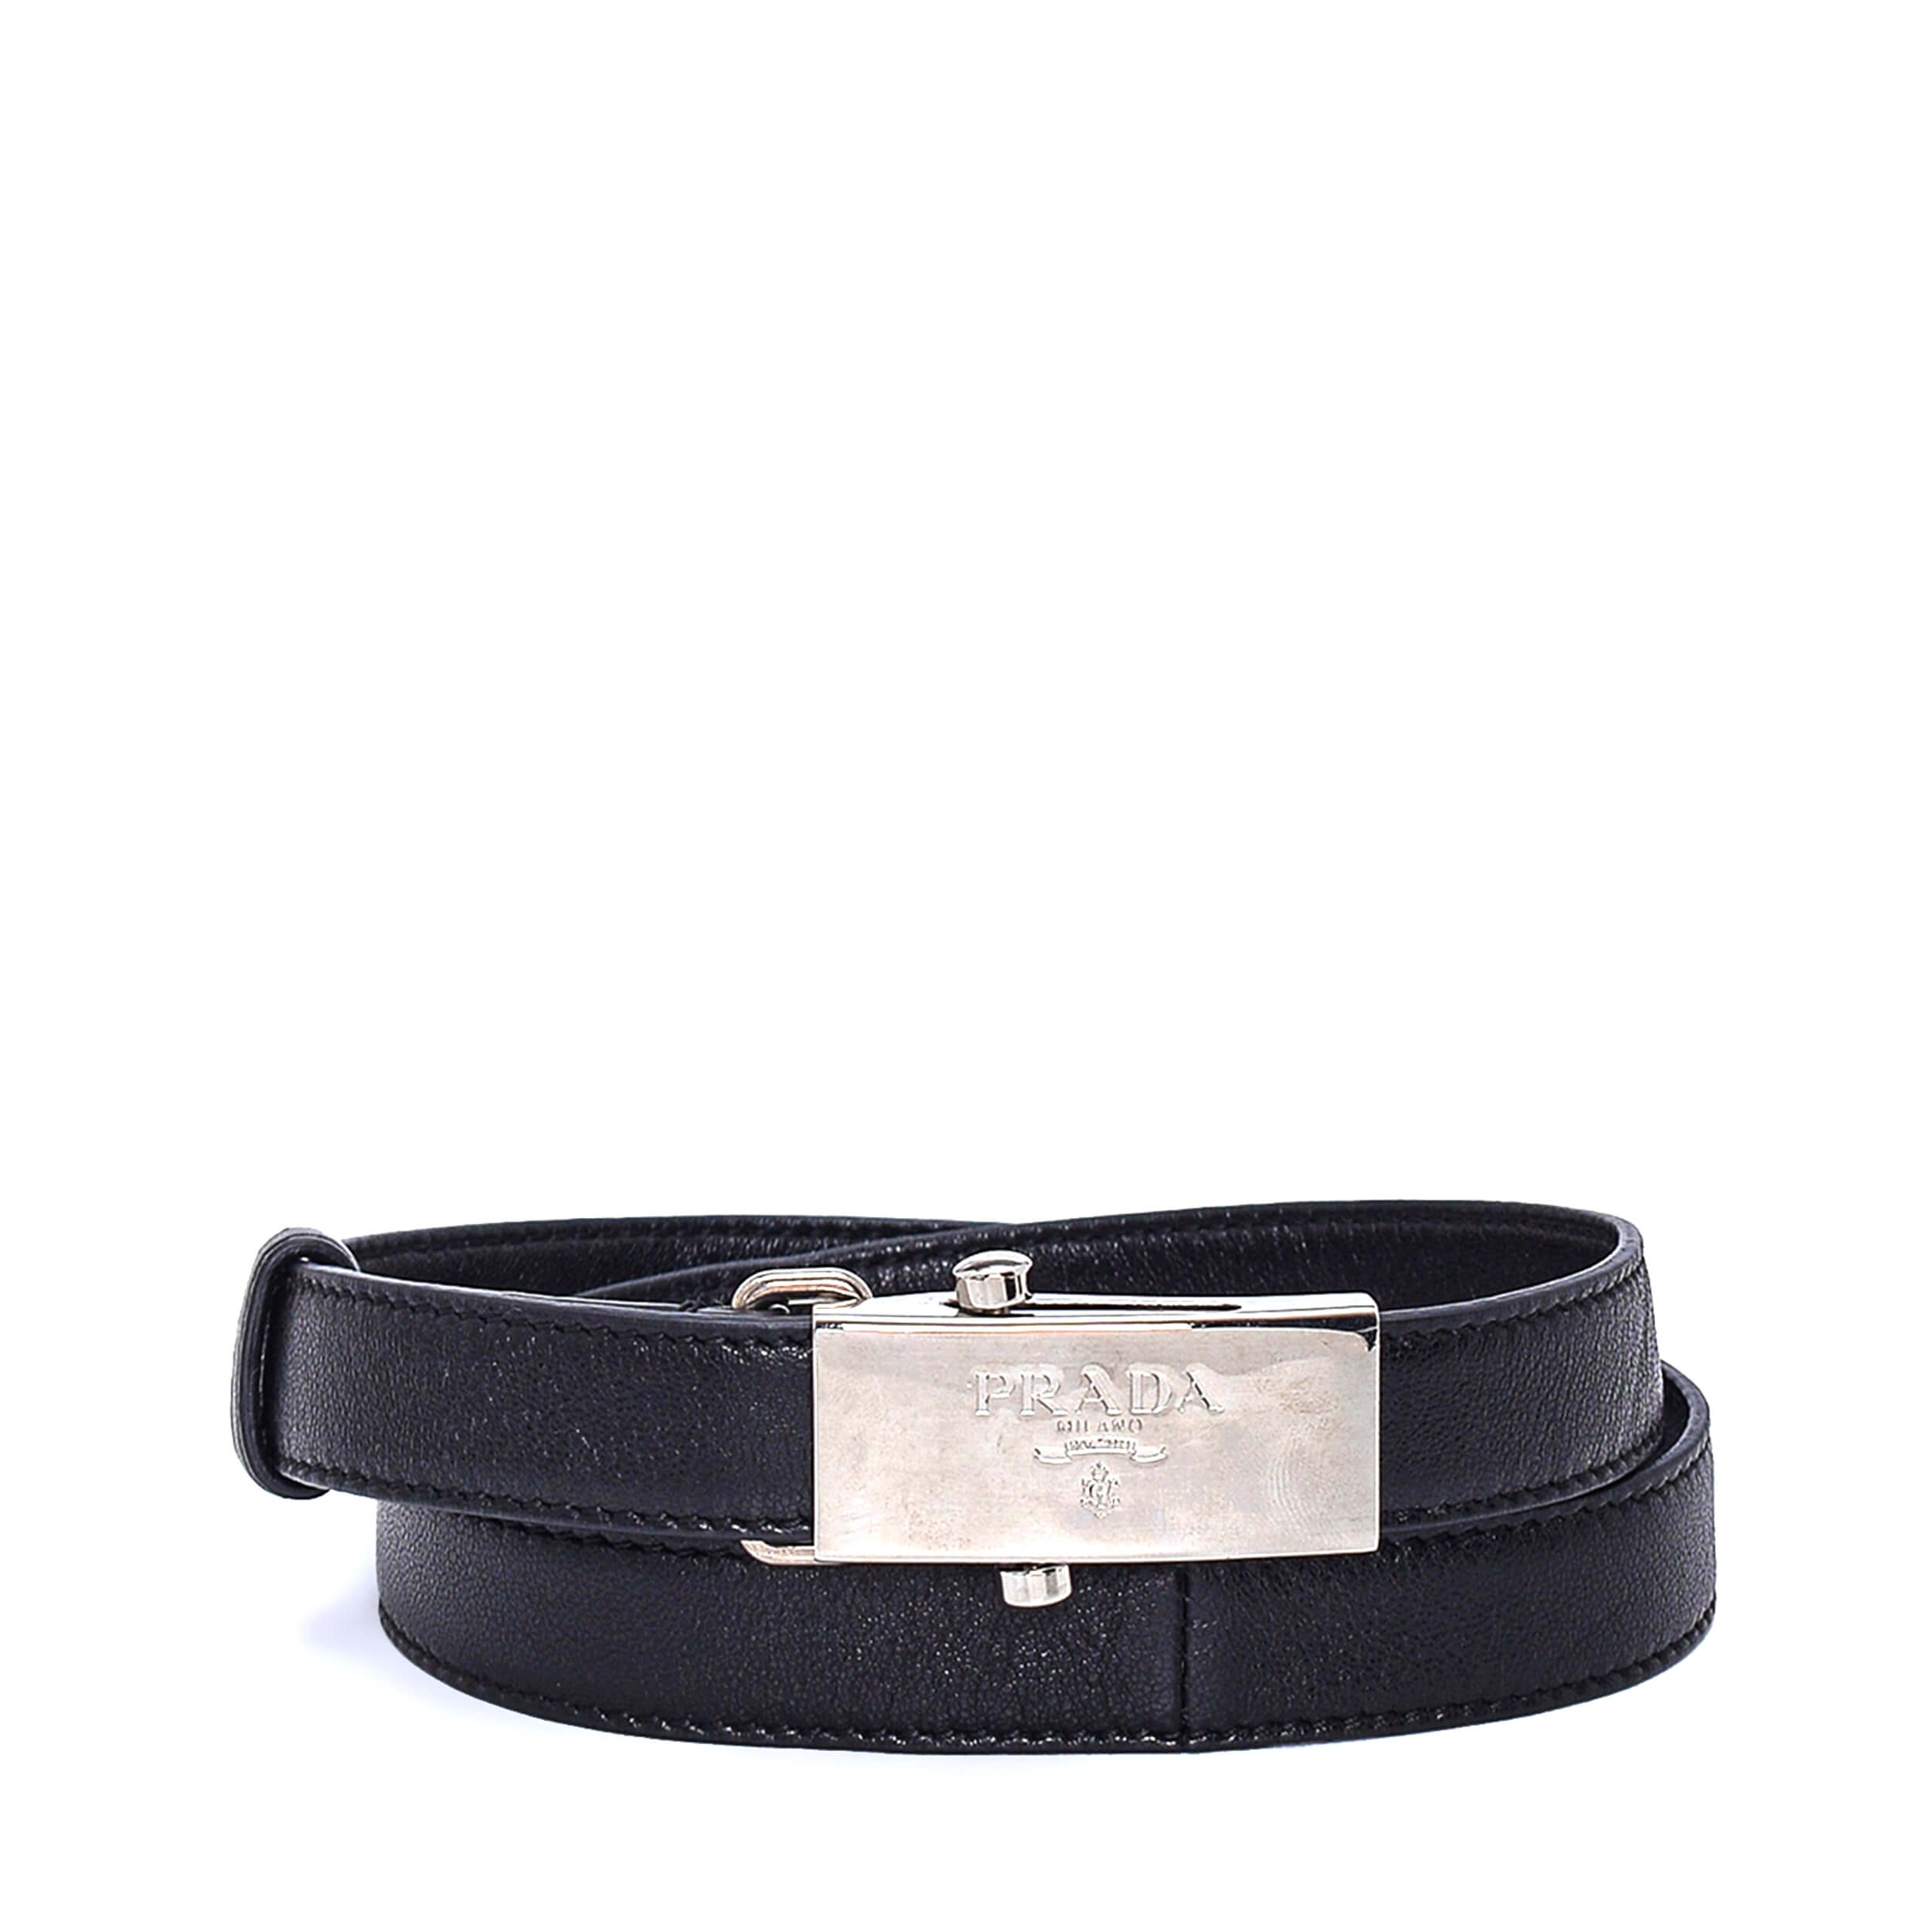 Prada - Black Smooth Leather Prada Plaka Belt 